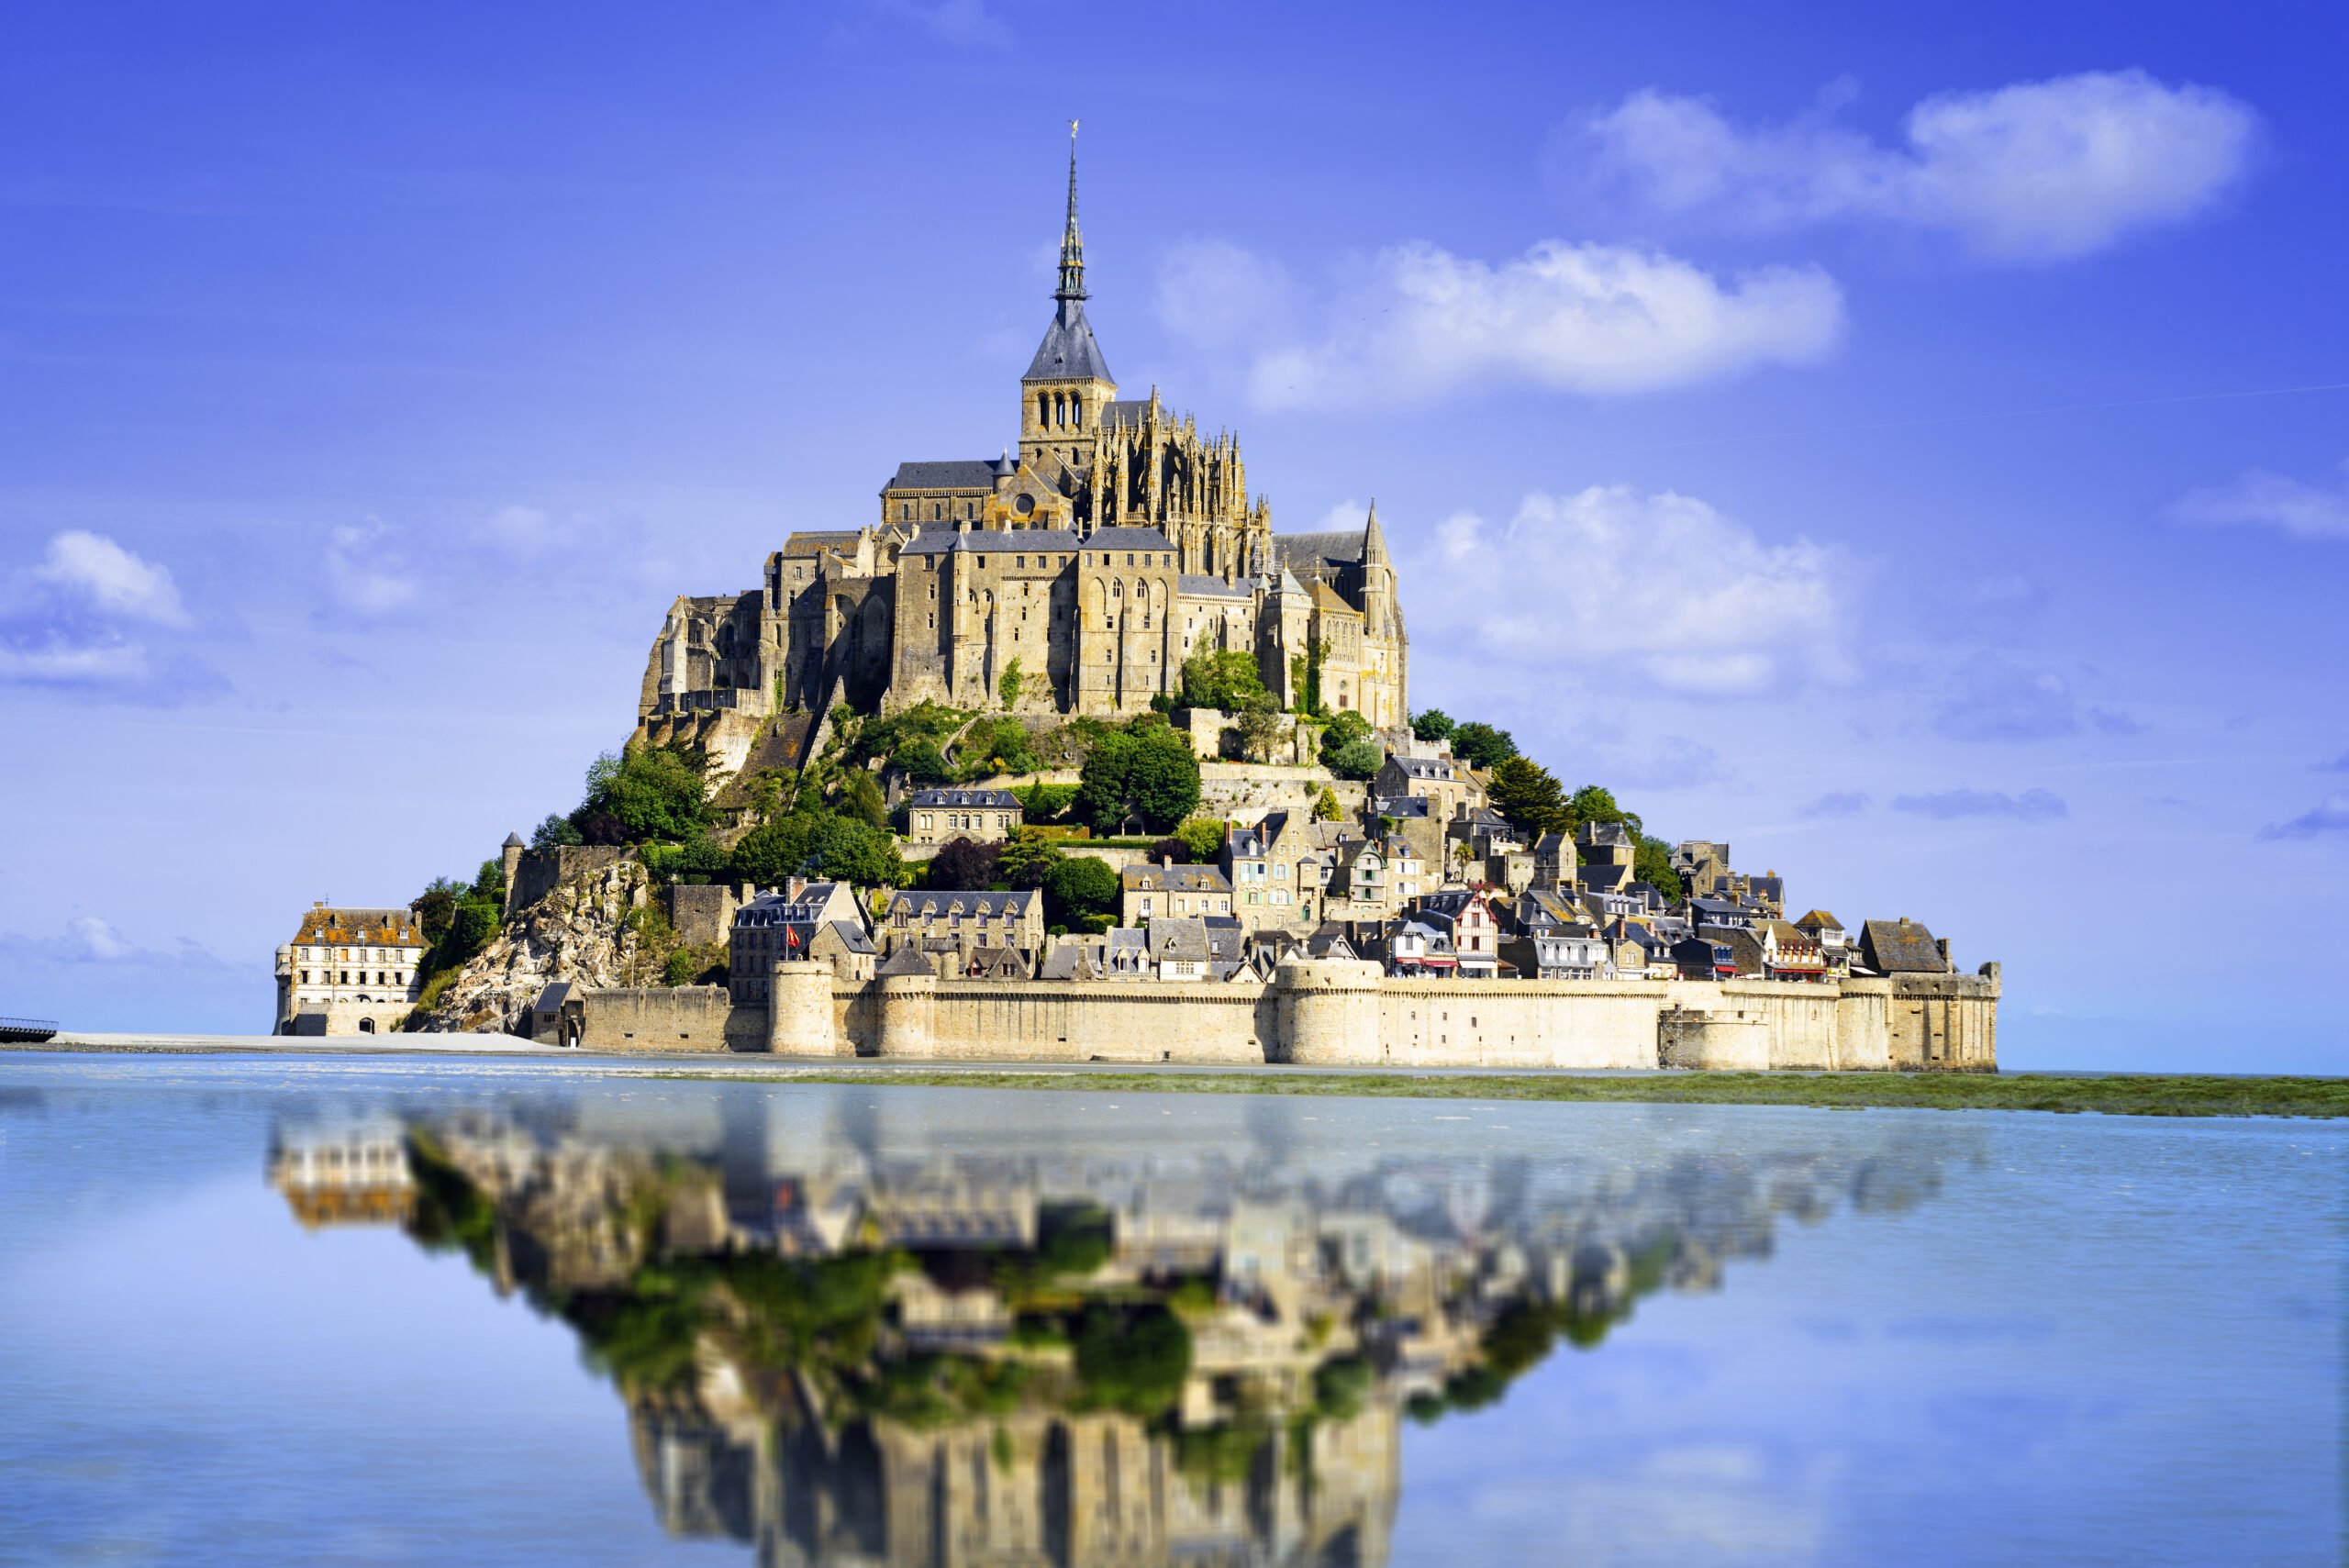 Mont saint Michel abbey in Normandy, France.